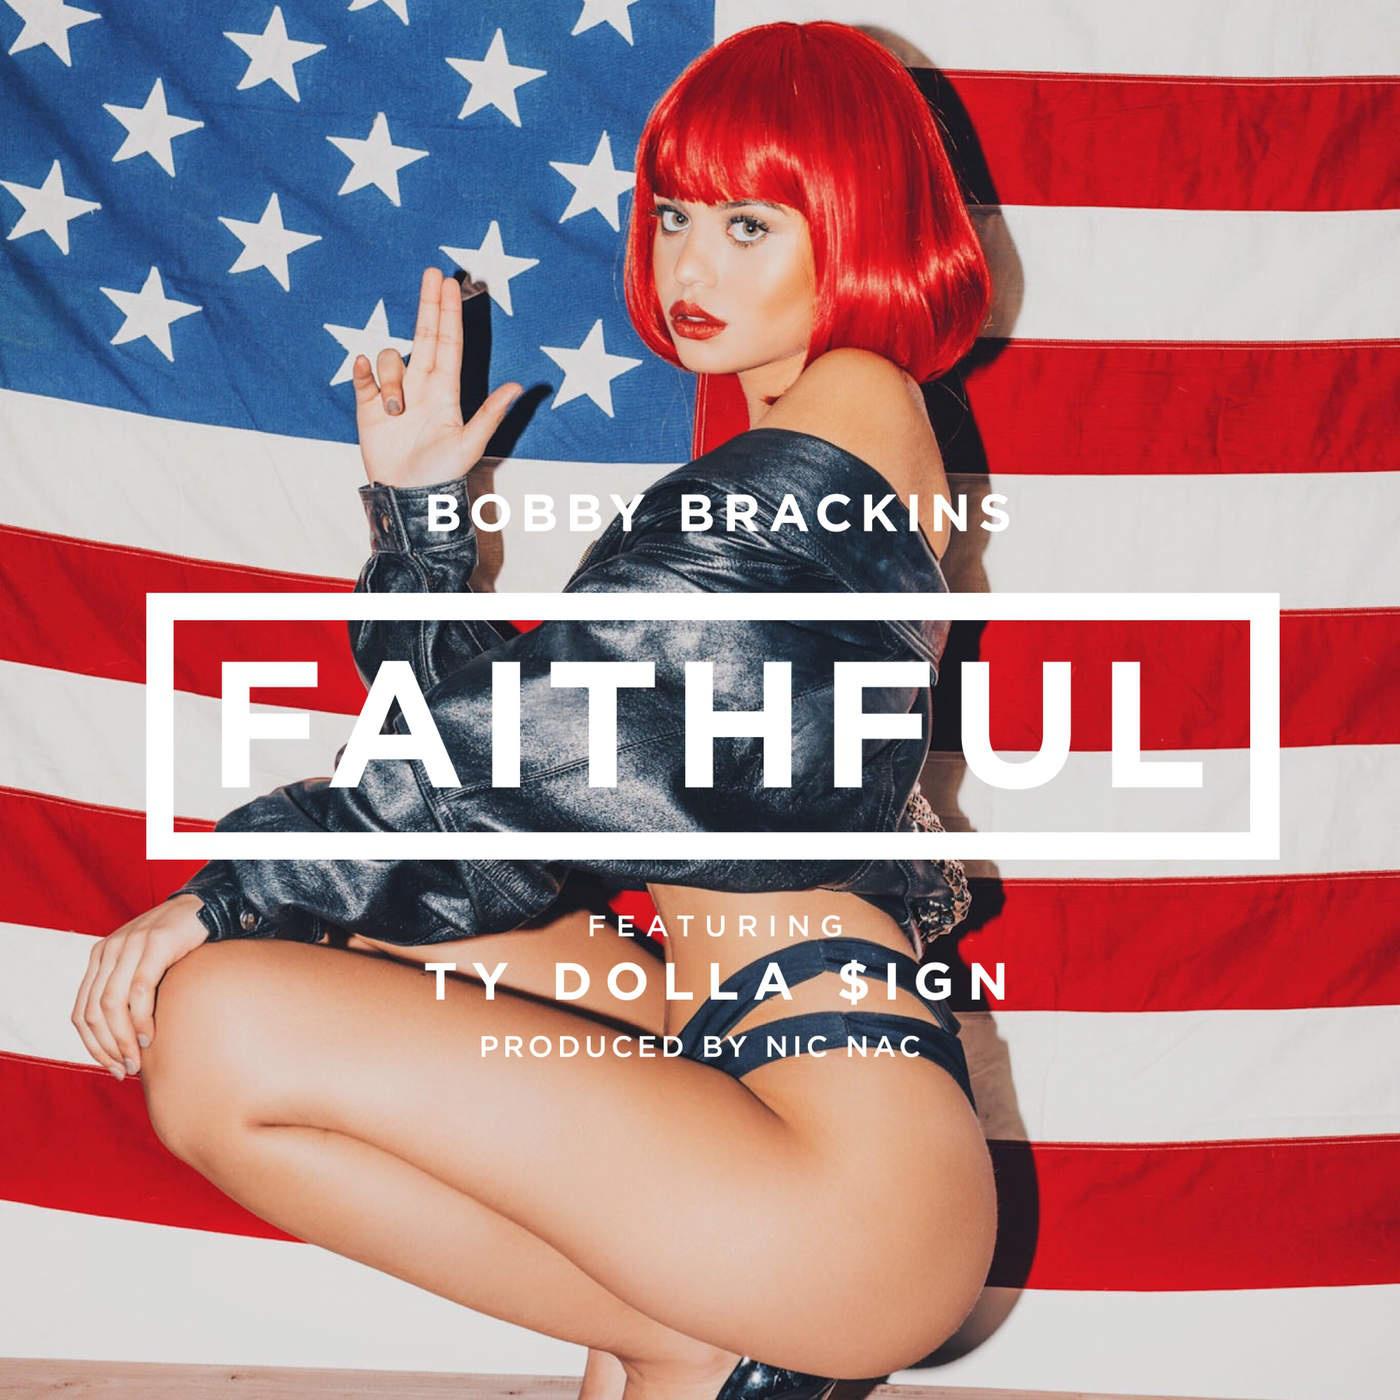 Faithful (feat. Ty Dolla $ign)